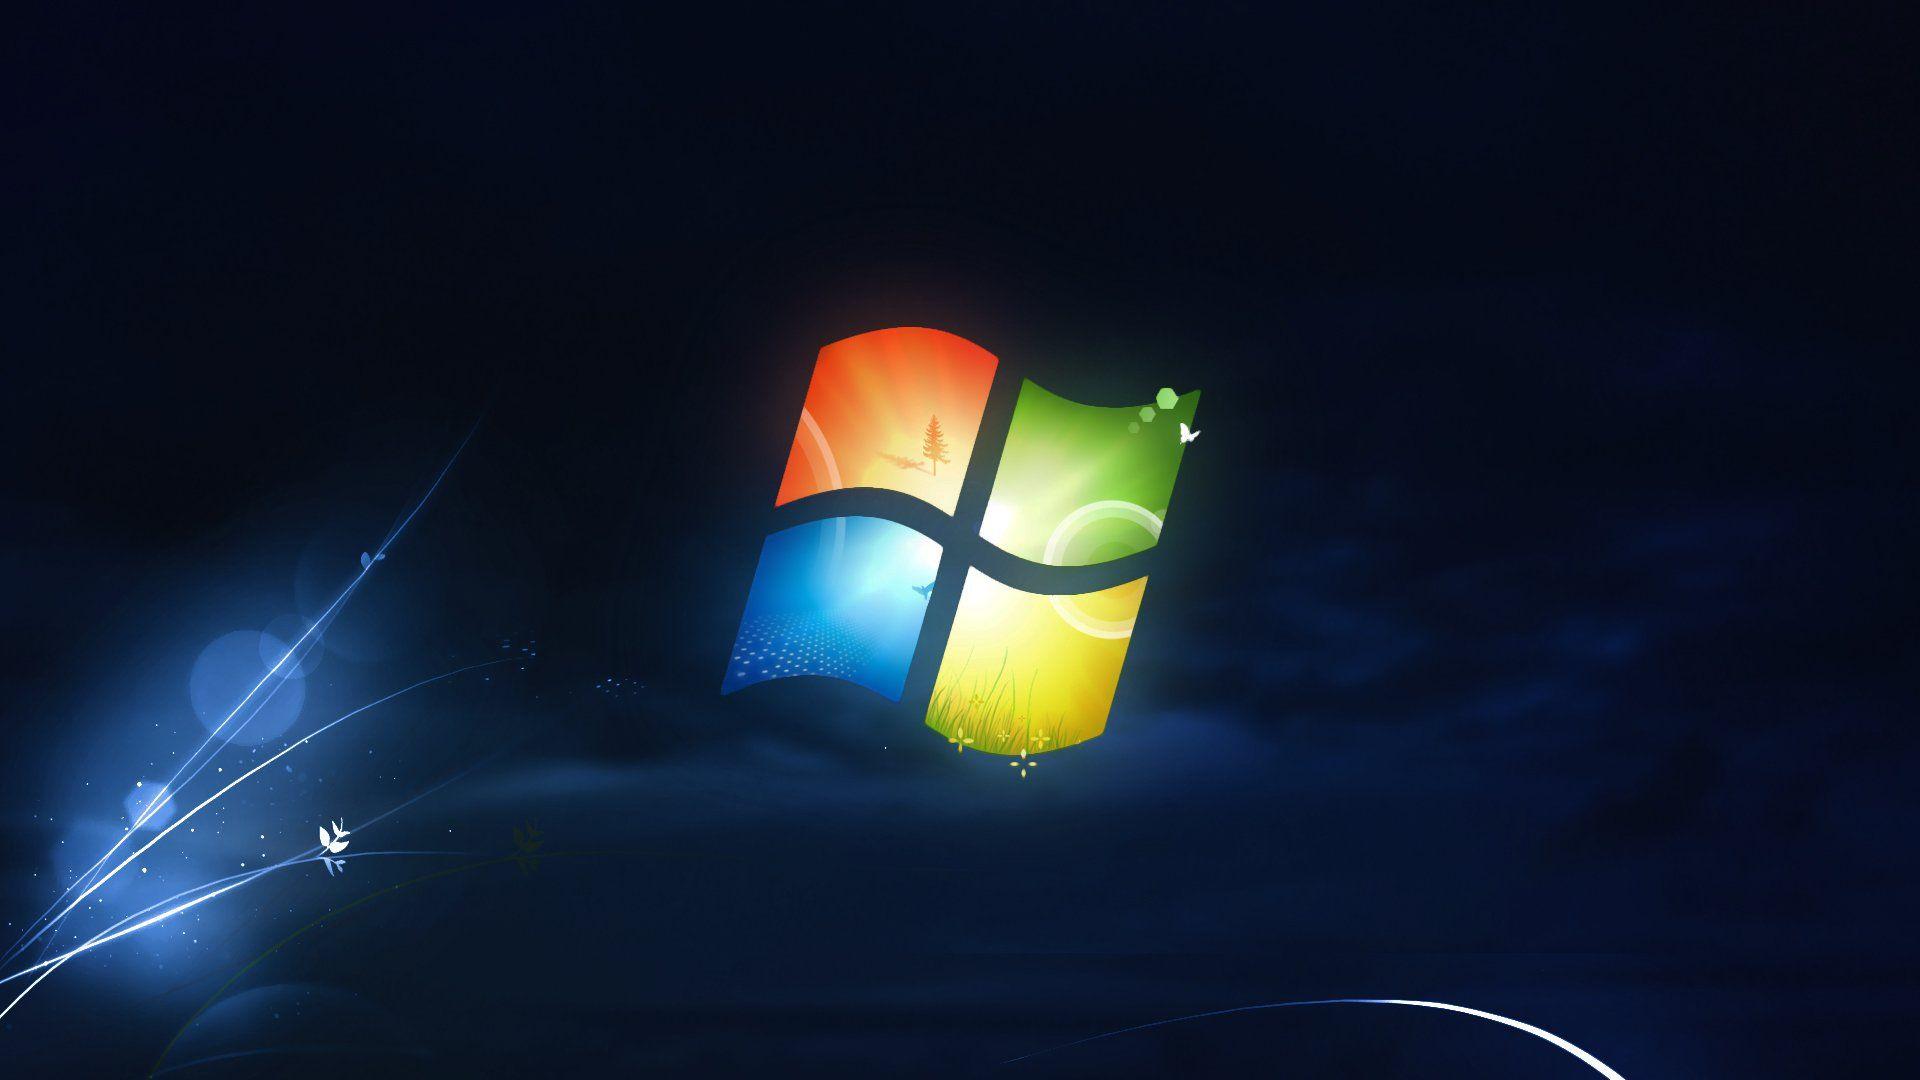 Old Microsoft Windows Logo - Microsoft Windows Logo Old Style Wallpaper (1920x1080)